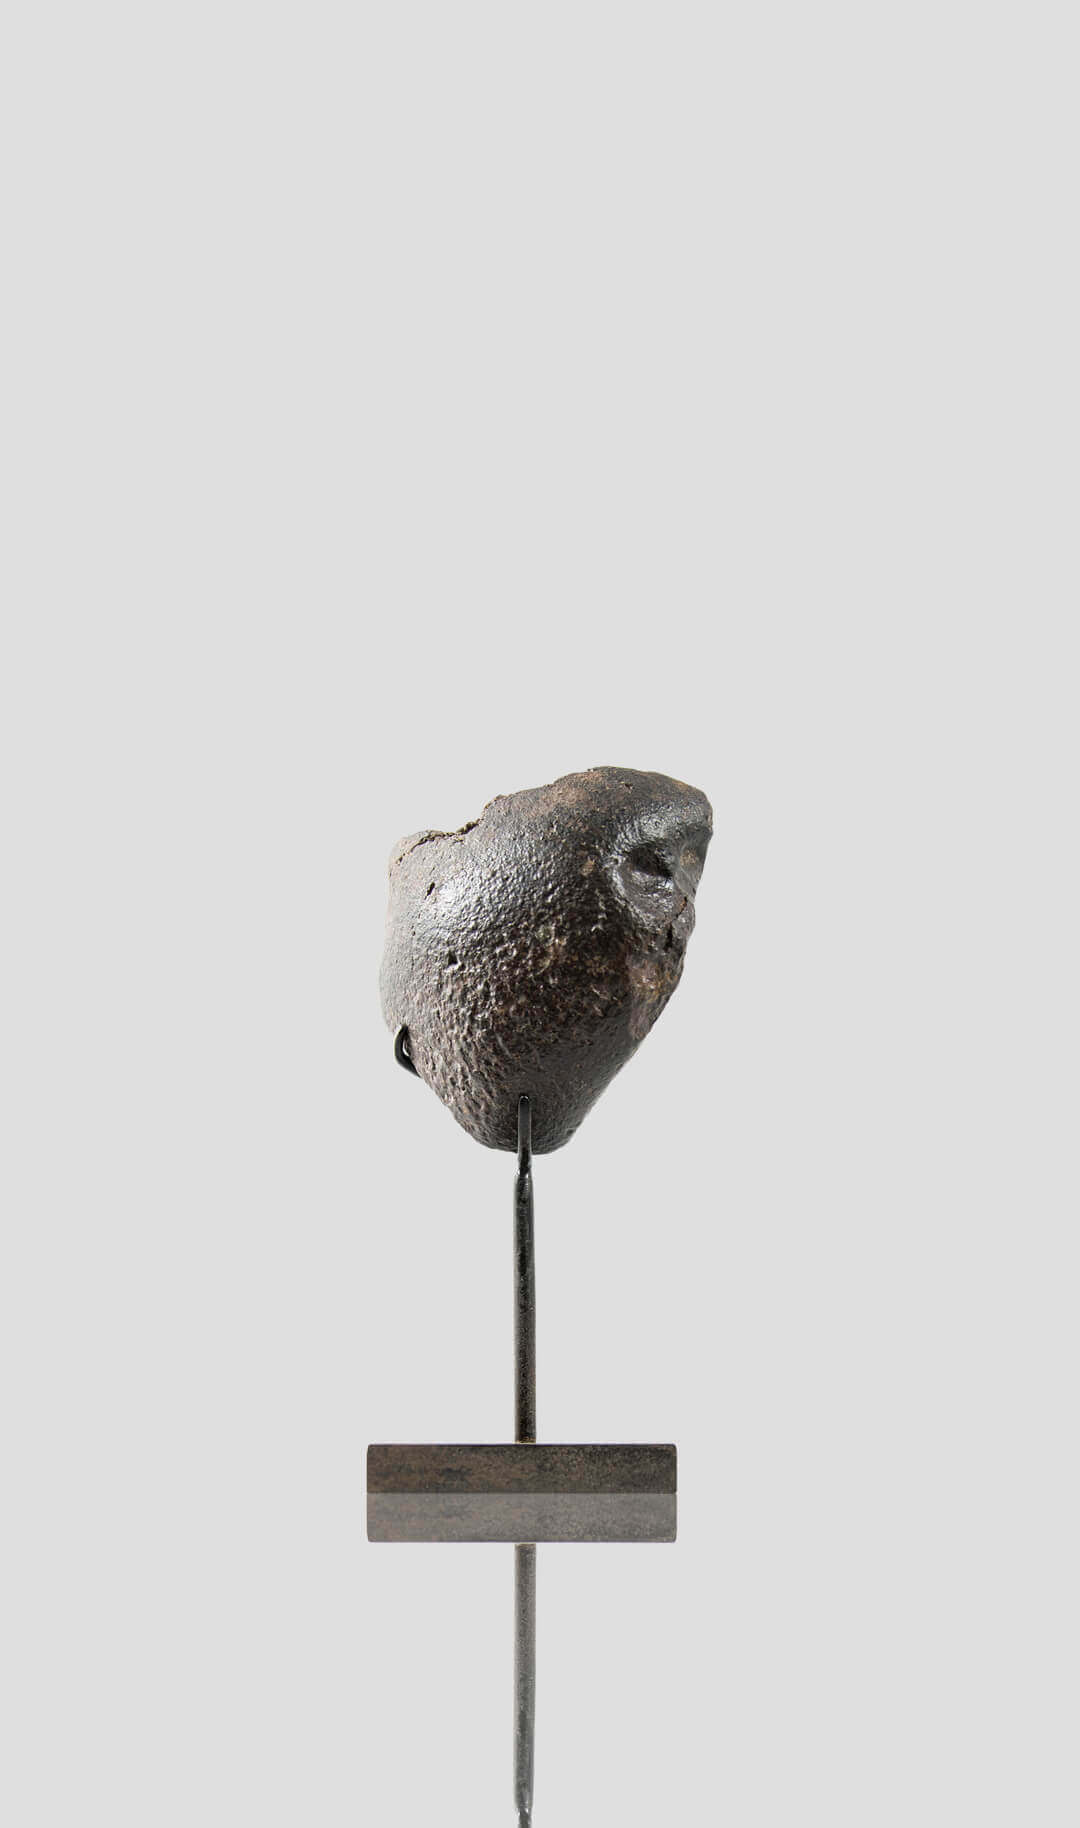 rare h5 nwa meteorite for sale on bronze stand 295